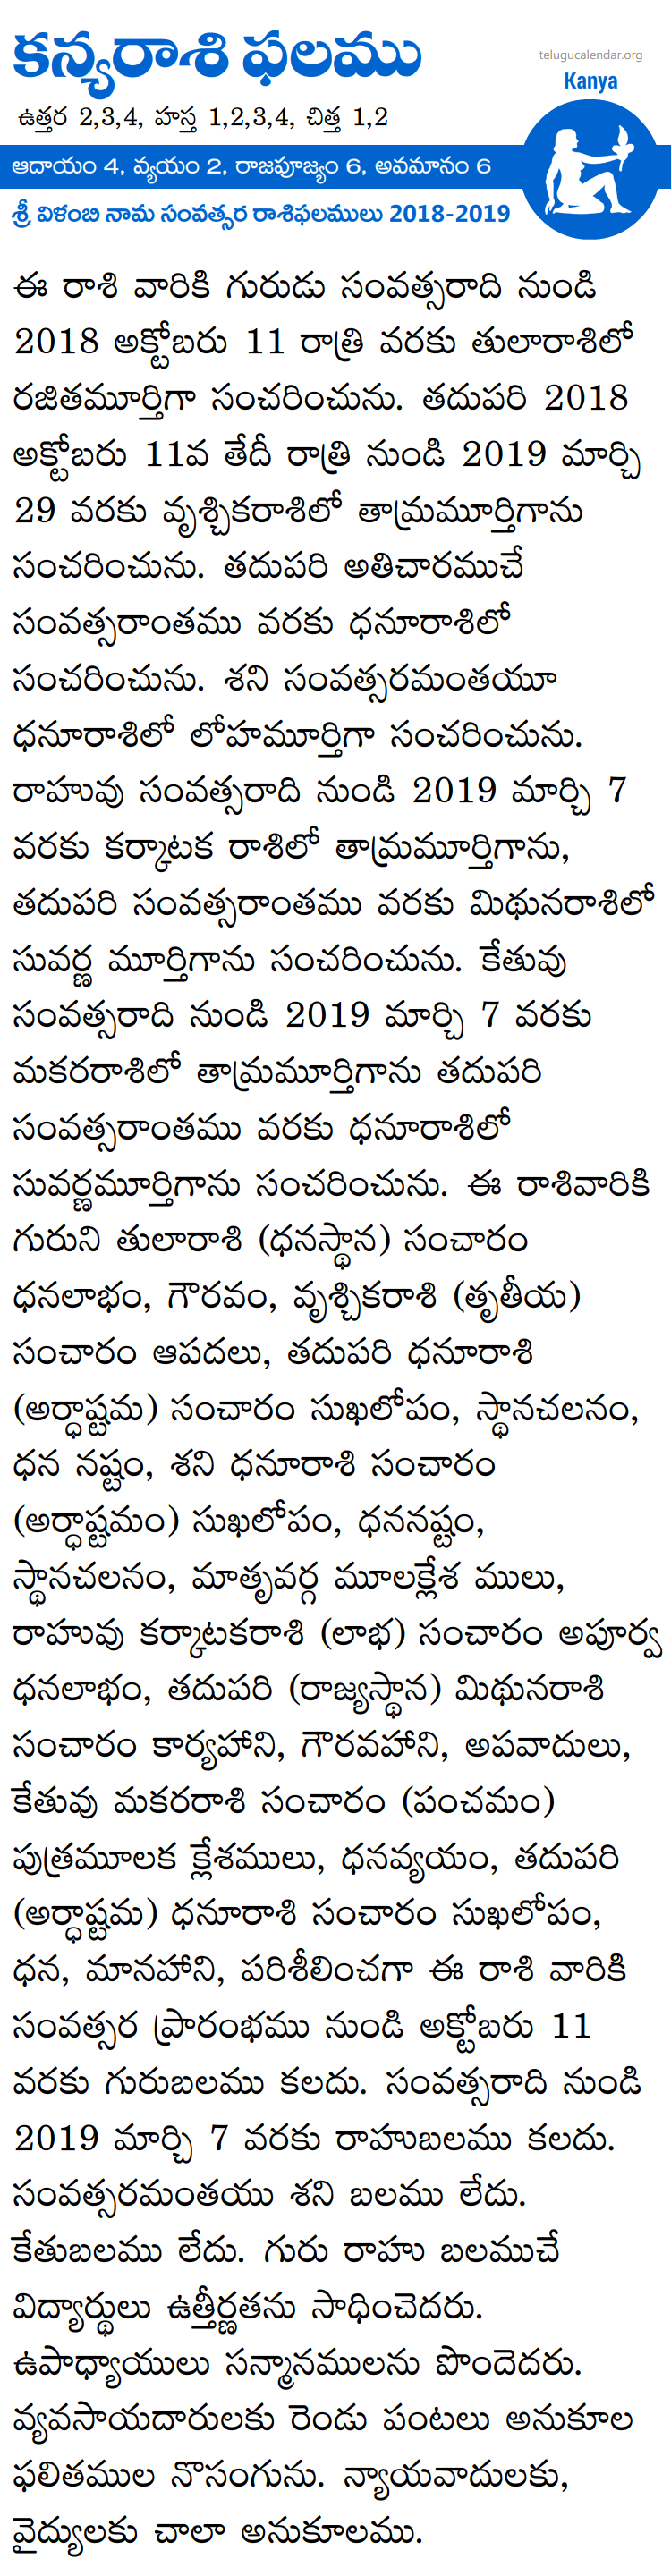 Kanya Rasi Phalalu 2019-2020 Telugu